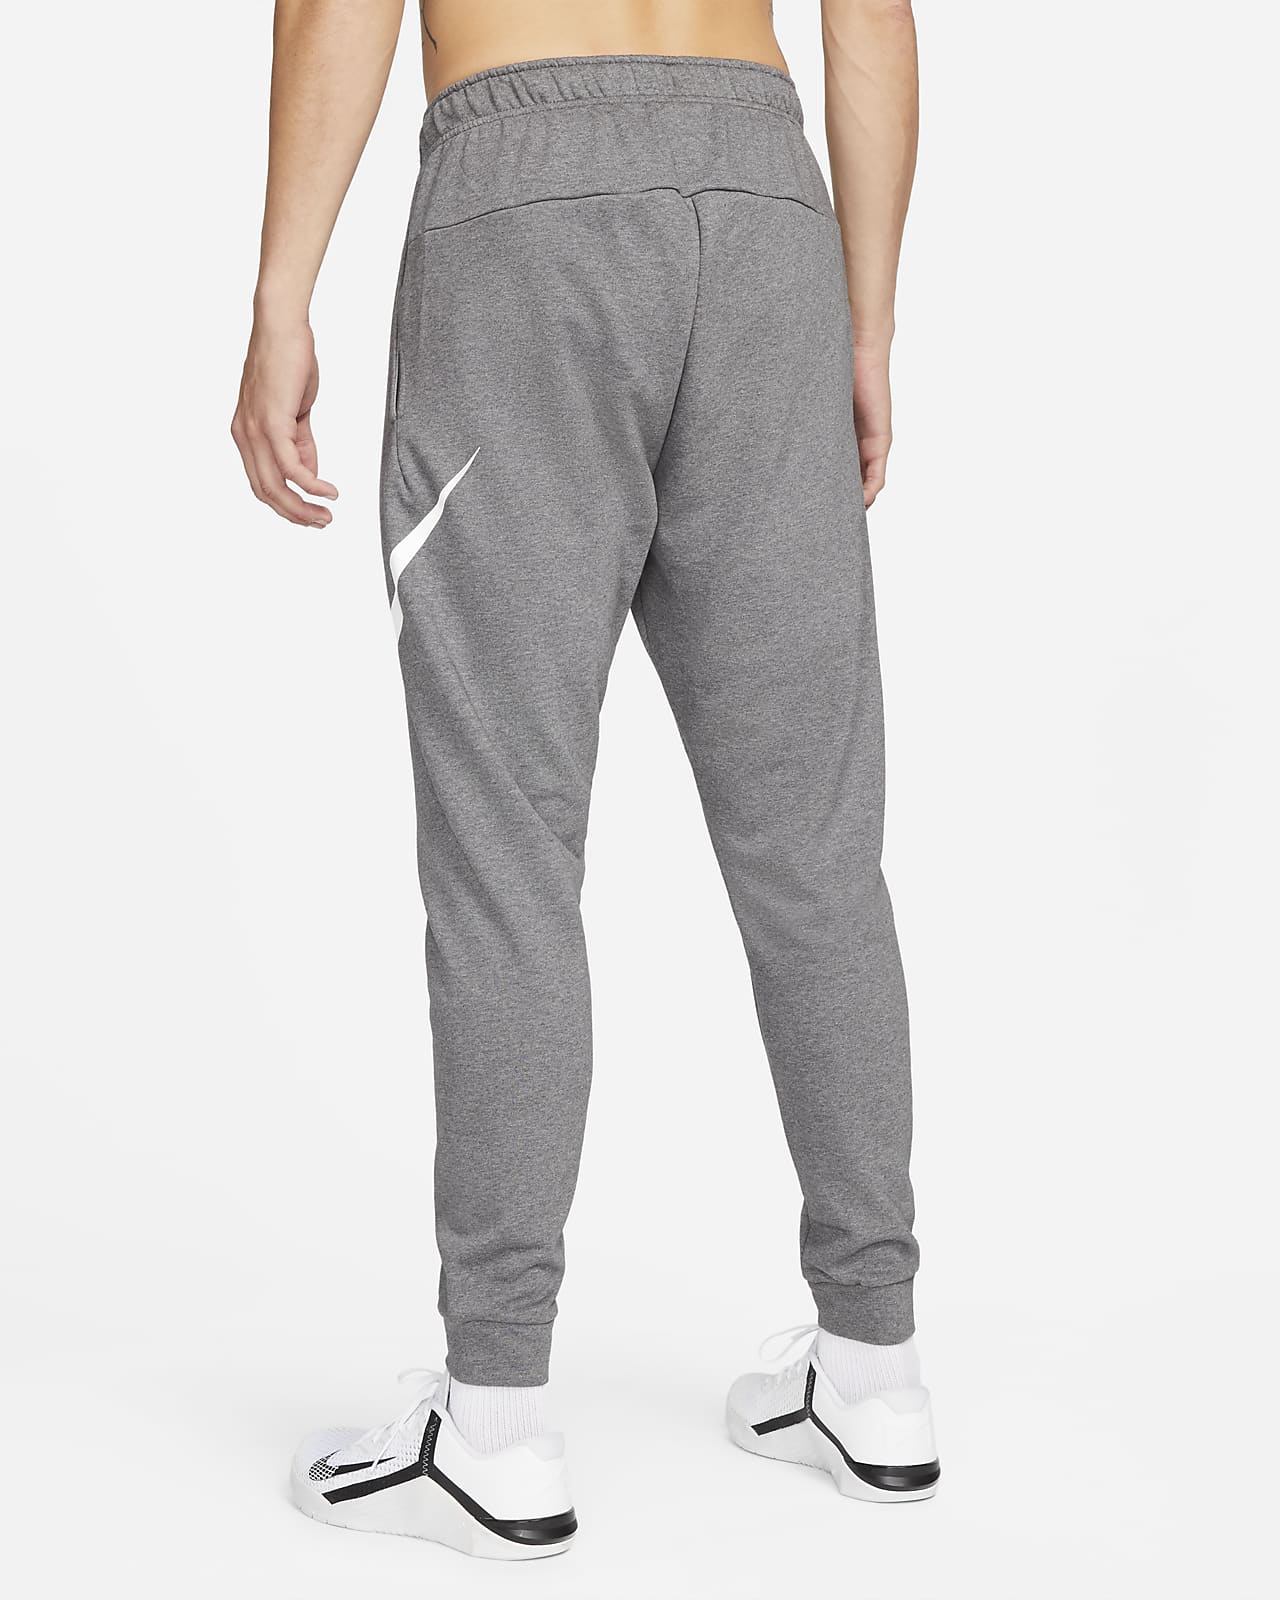 Nike Dry Graphic Dri-FIT Taper Fitness Pants.